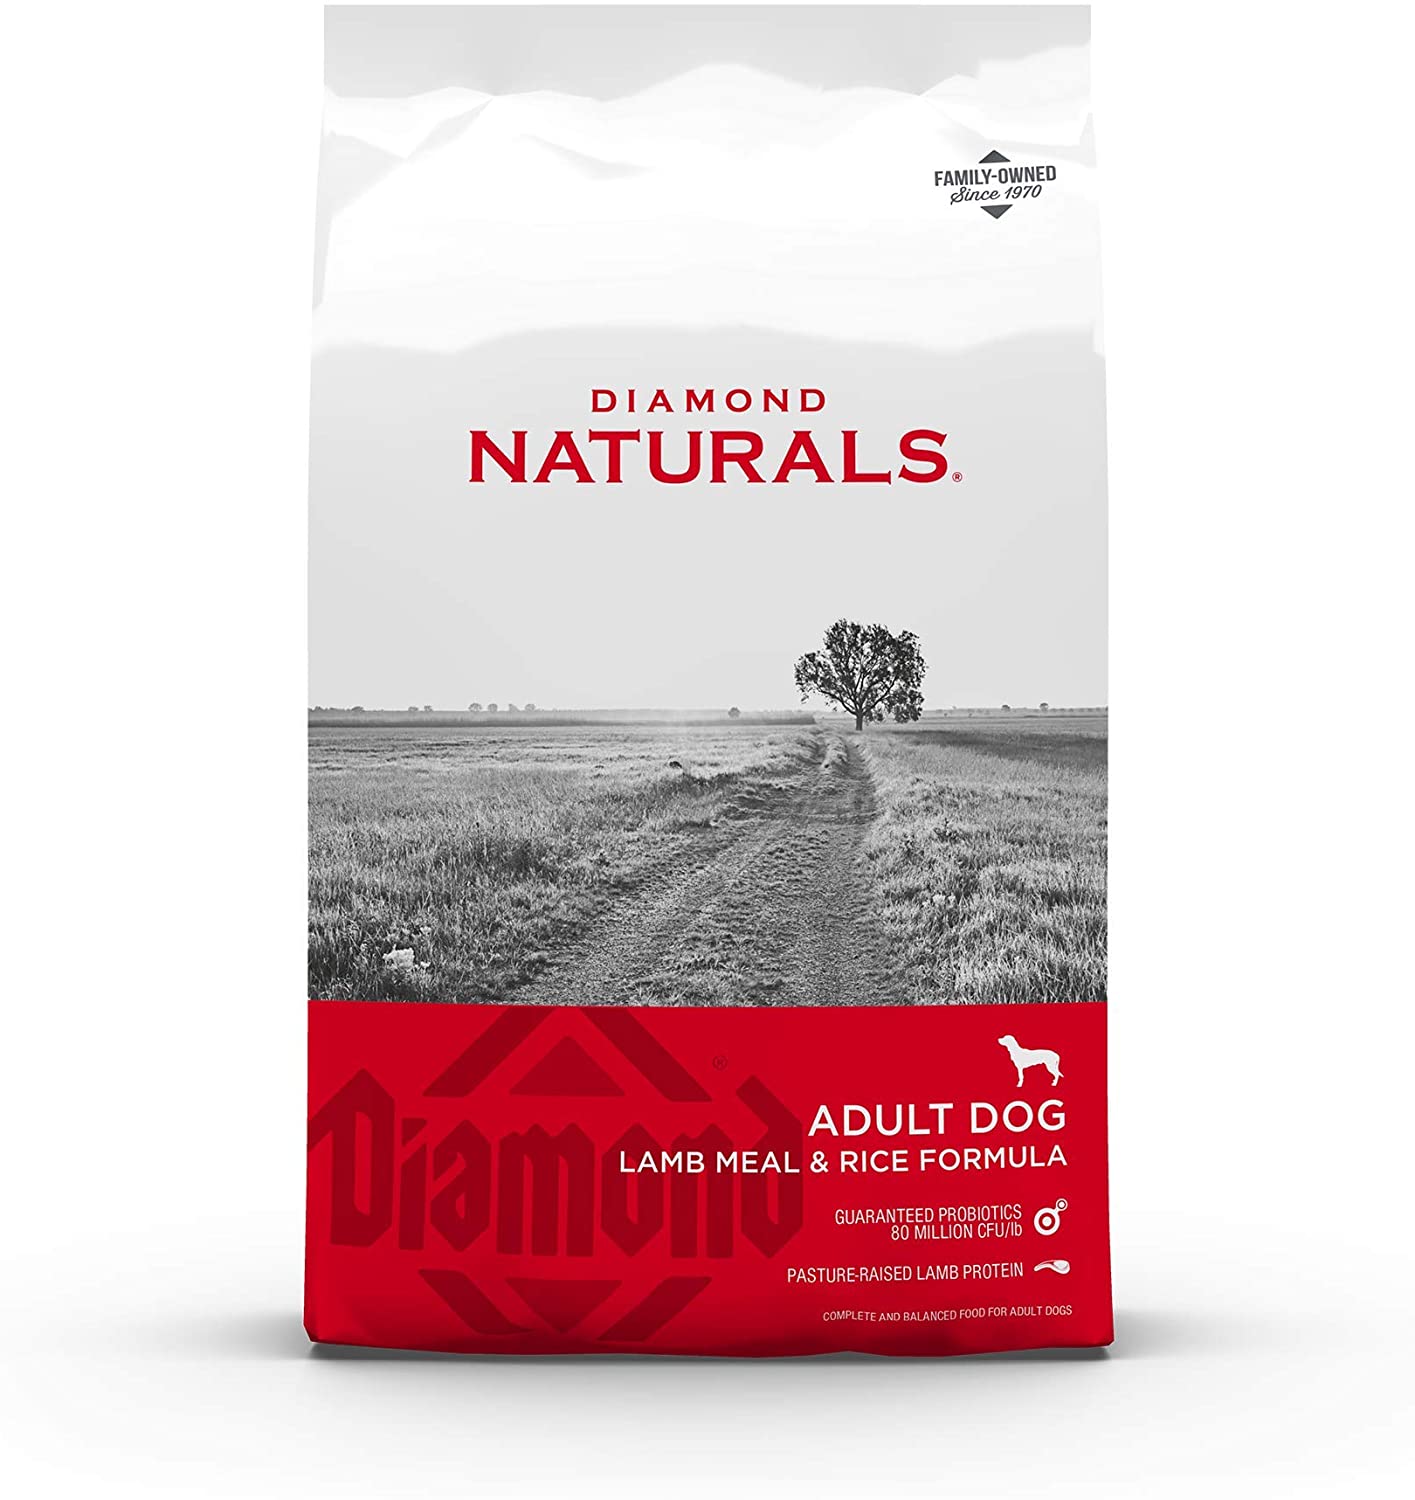 Diamond Naturals Dog Food